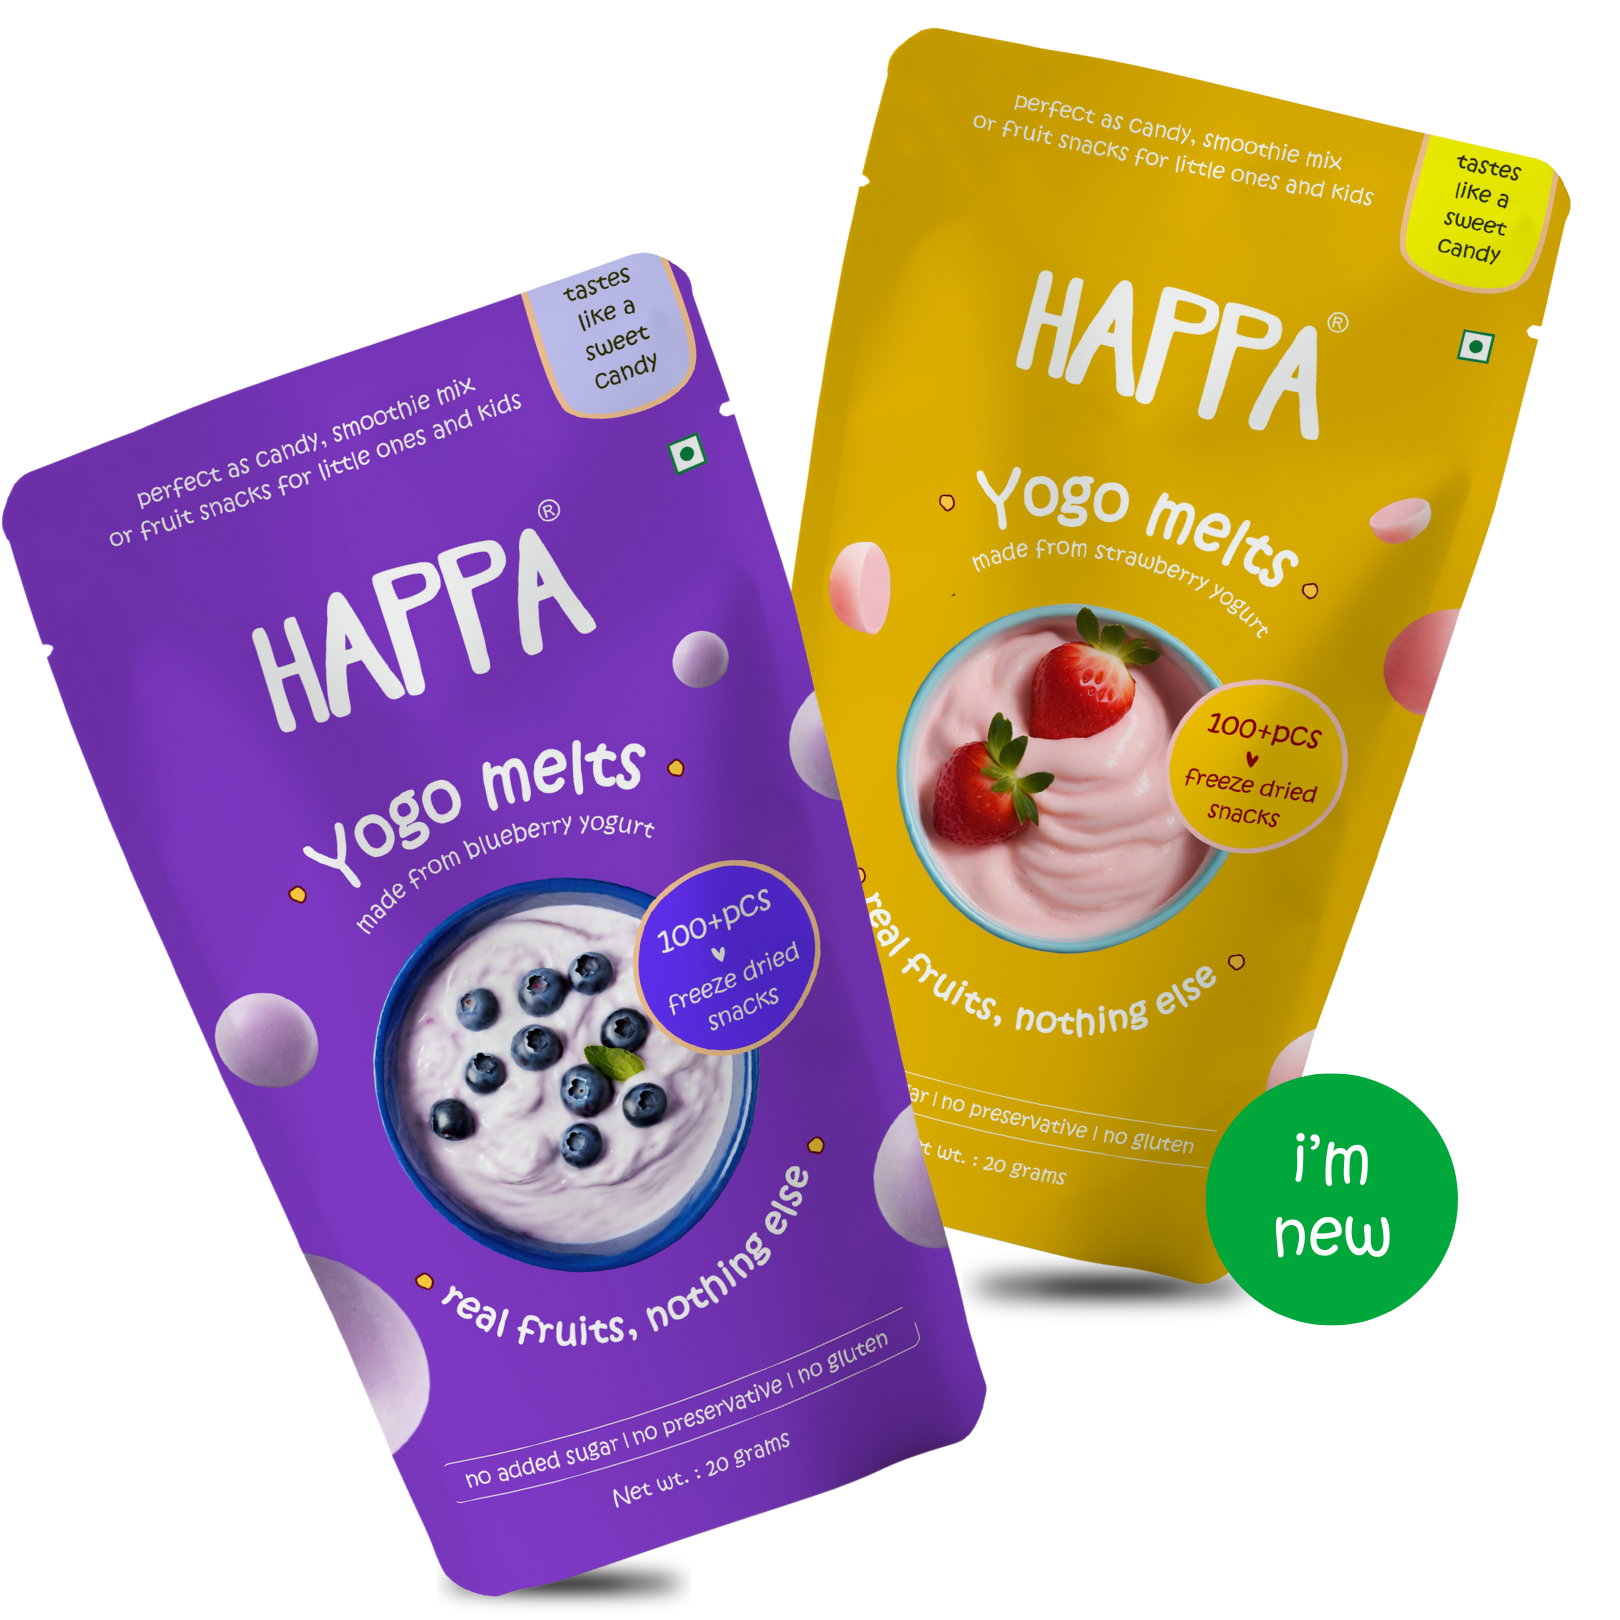 Yogo Melts - Strawberry & Blueberry Yogurt Melts Tastes like candies - Happa Foods